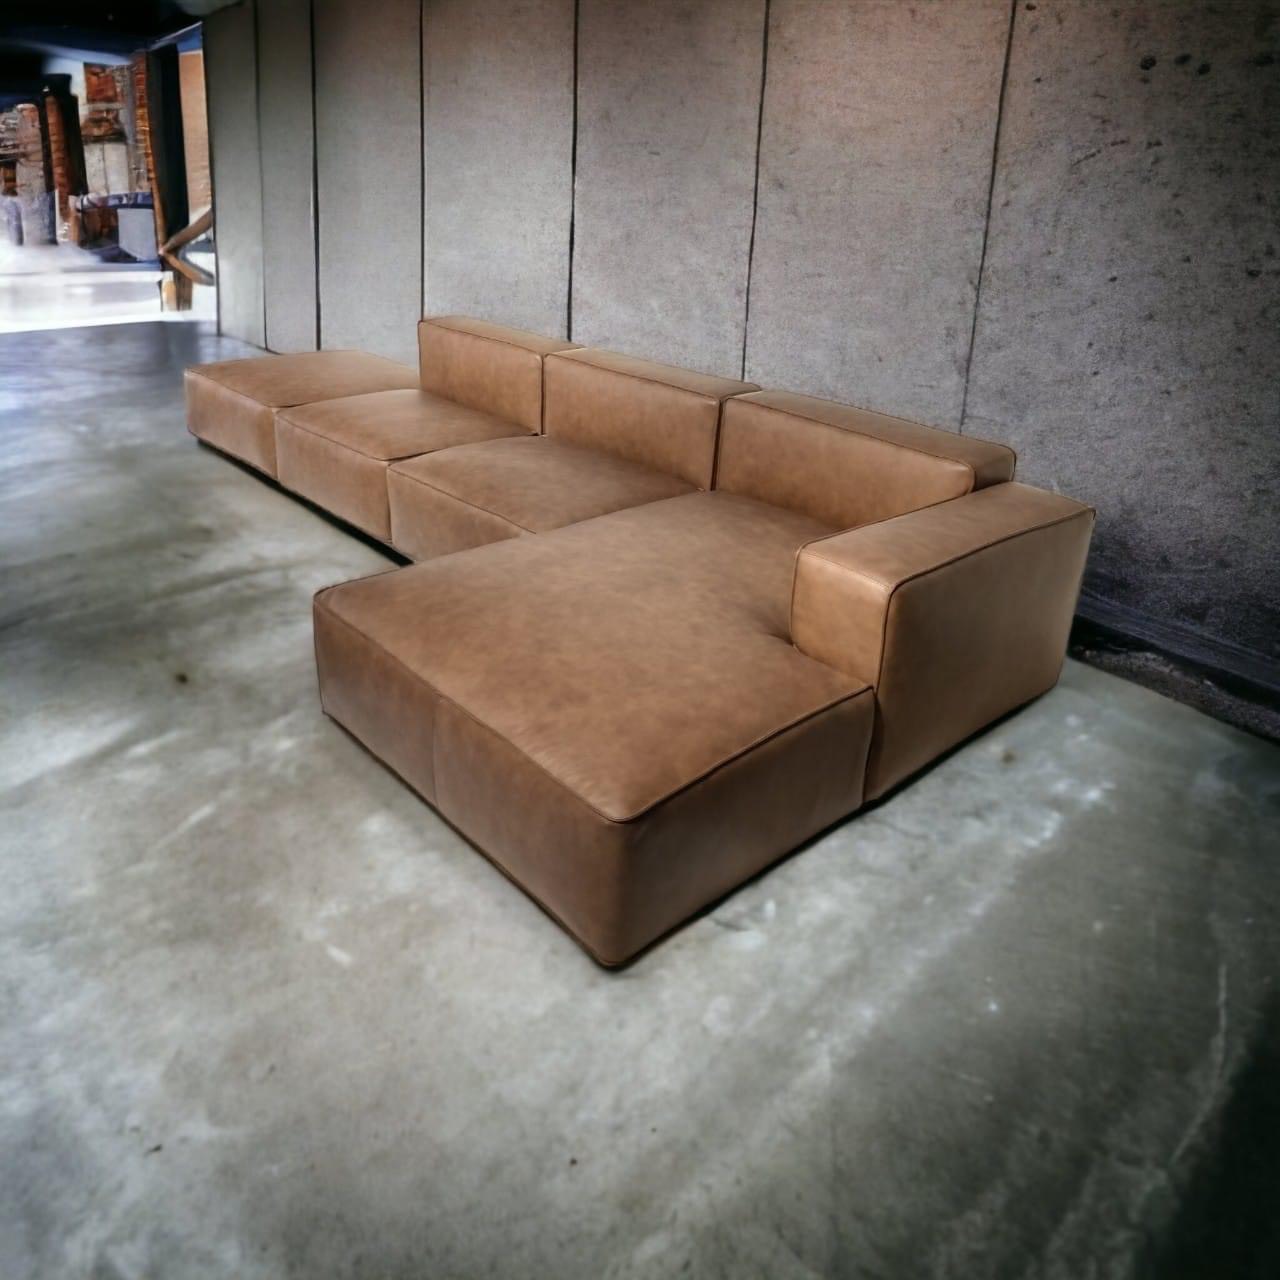 Sofa cao cấp màu gạch Tundo 3m4 x 1m8